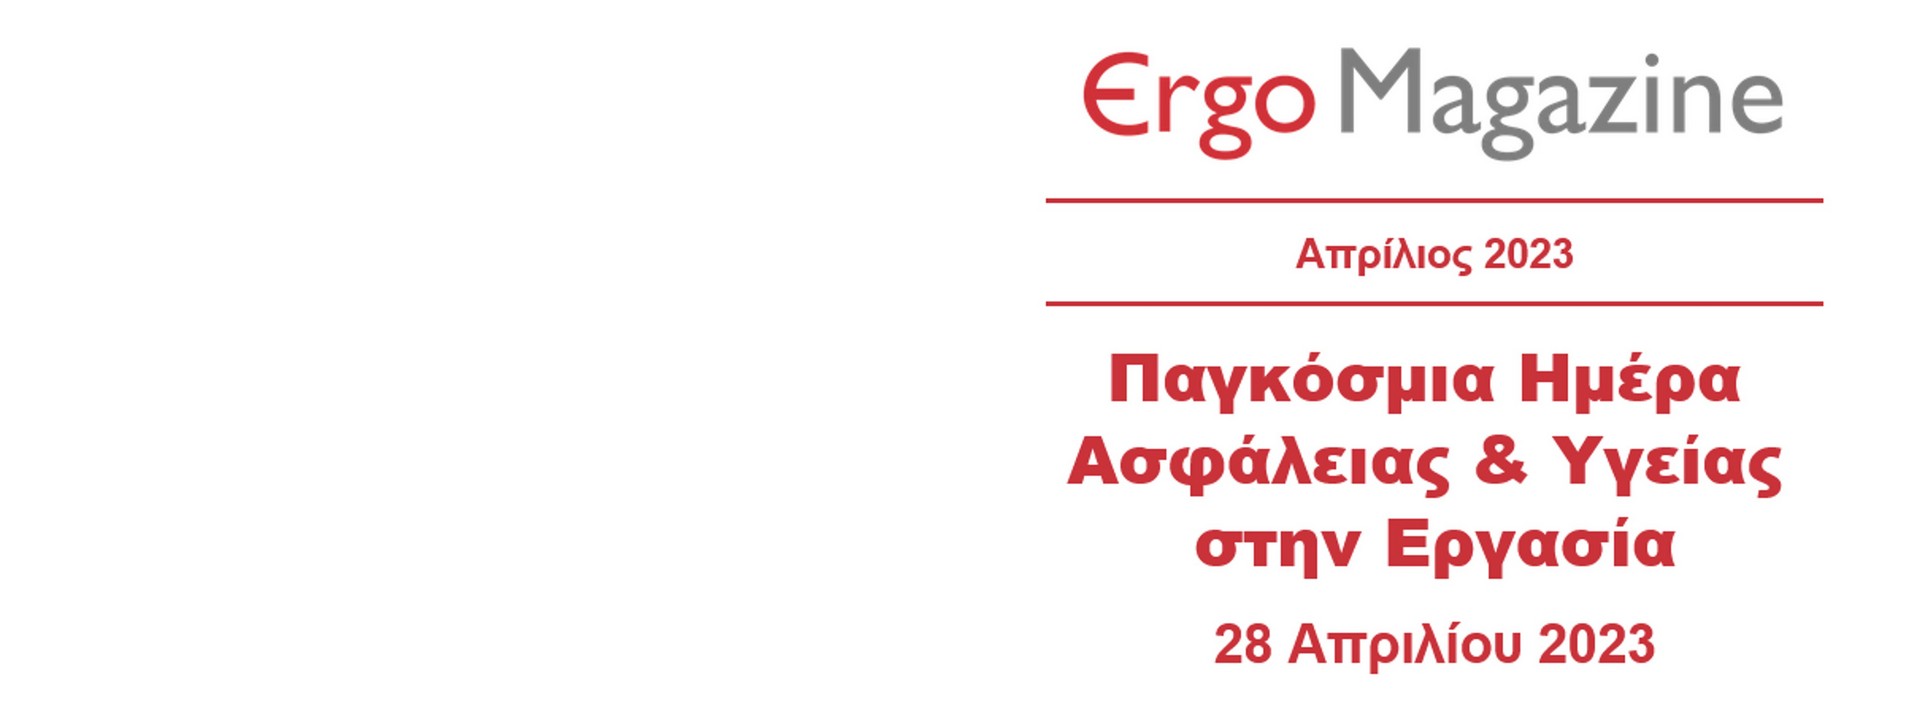 ErgoMagazine Apr 23